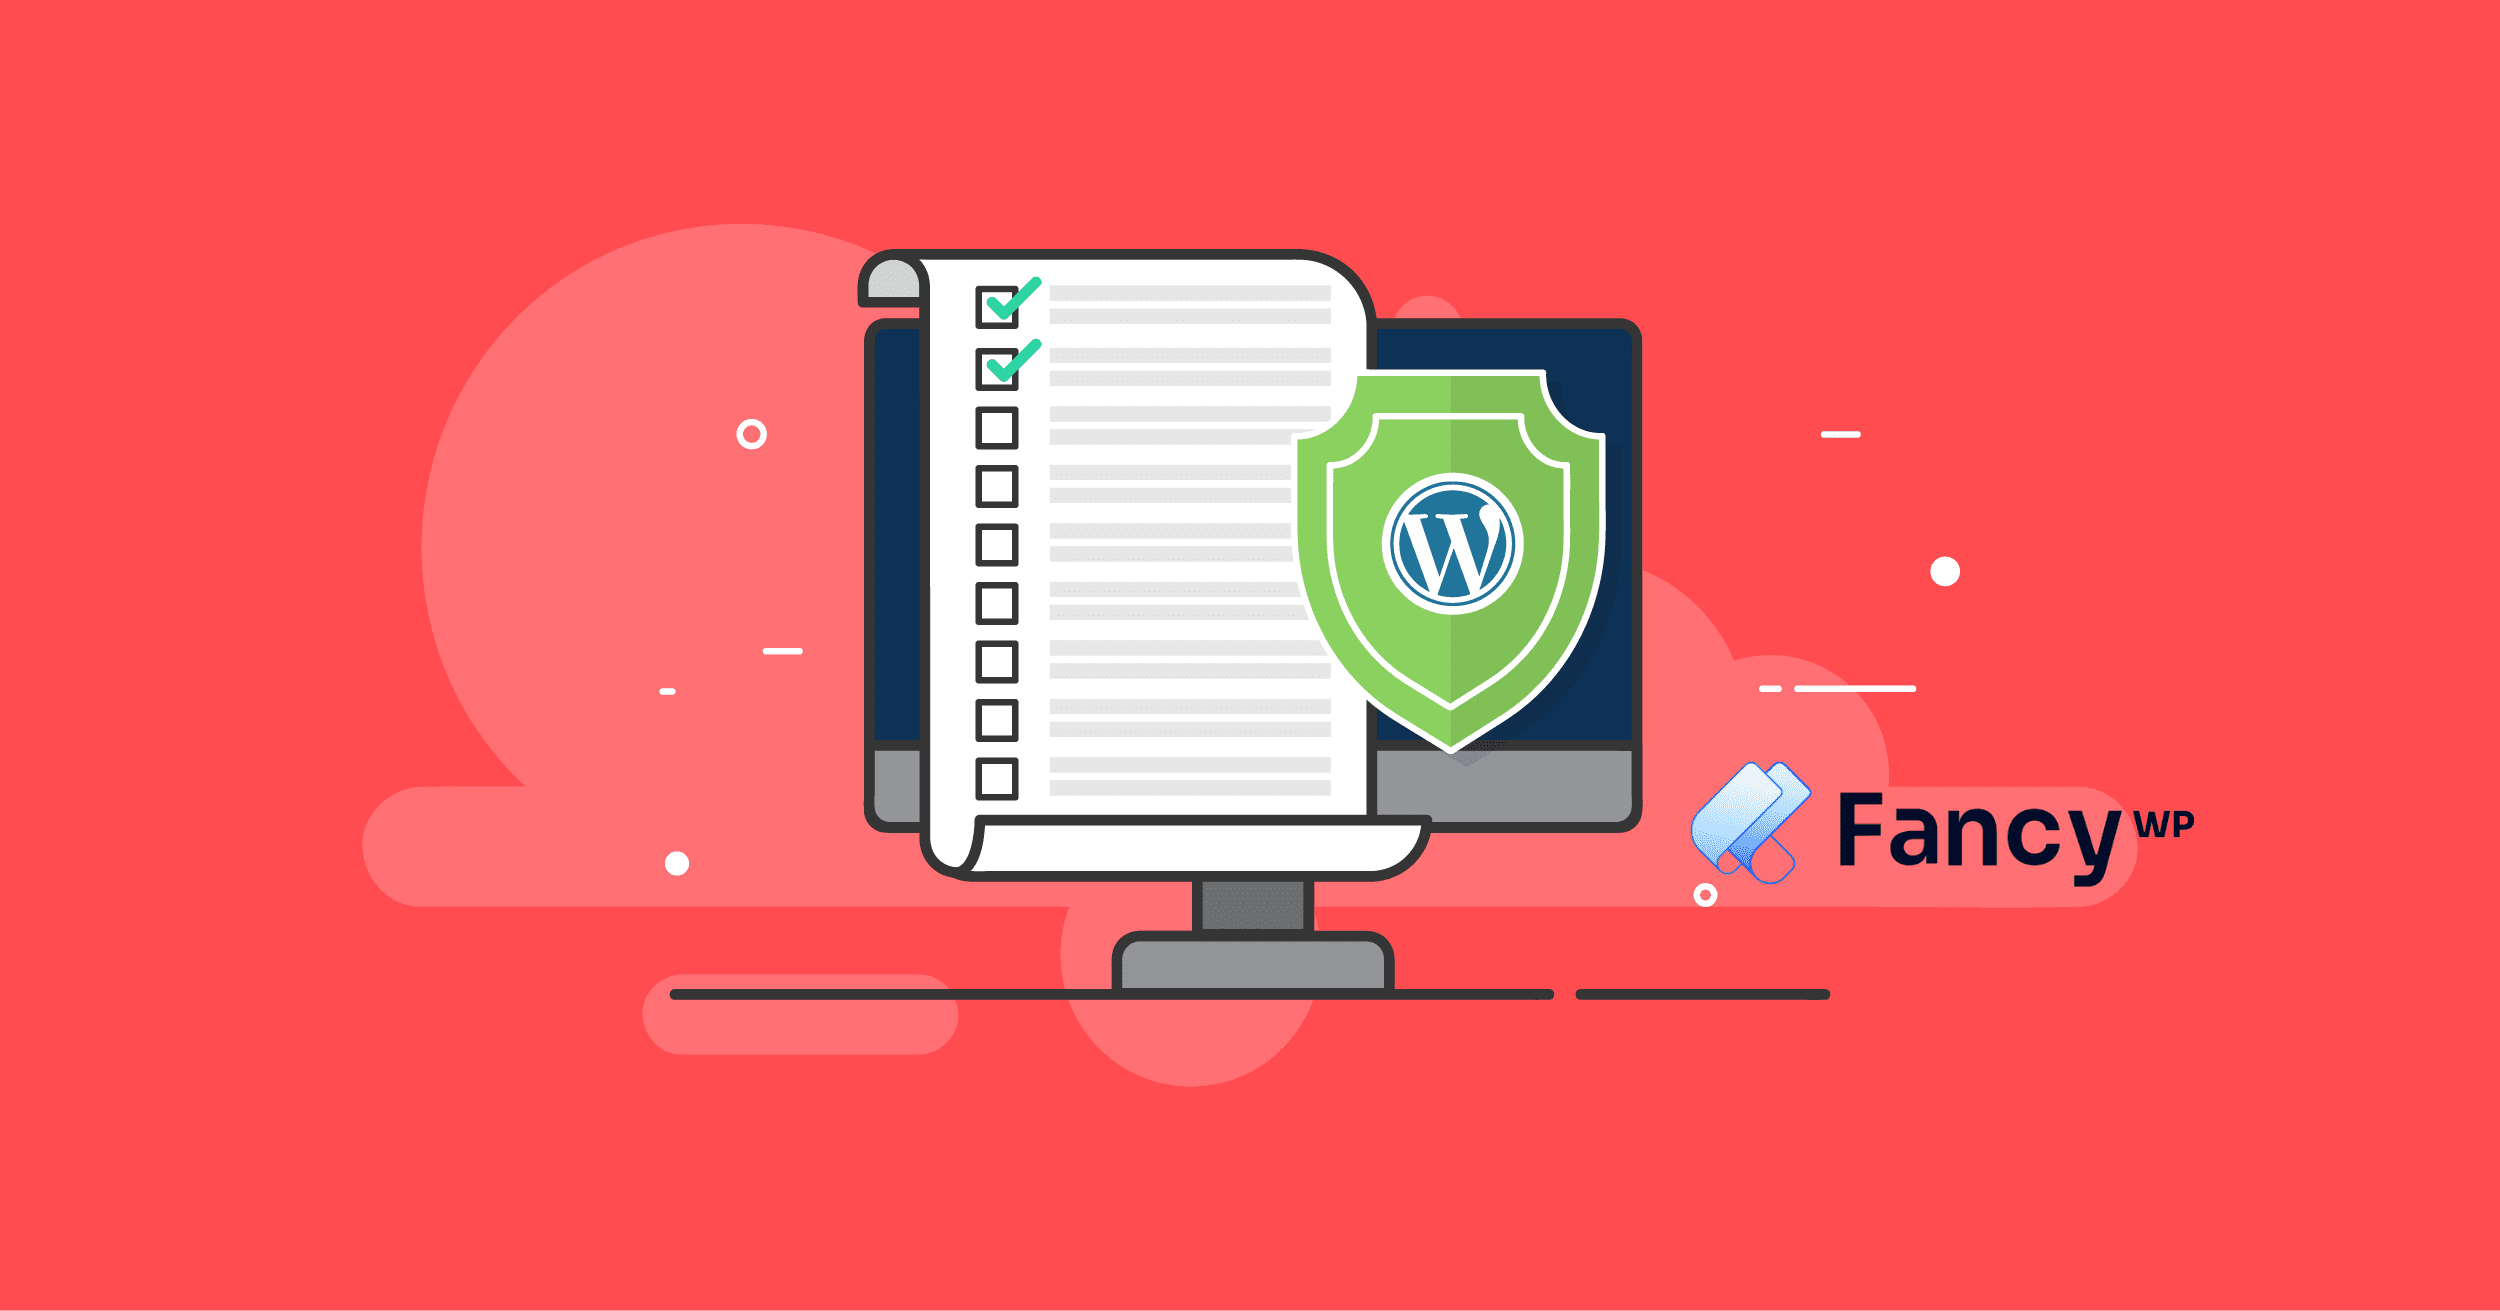 How to secure WordPress website